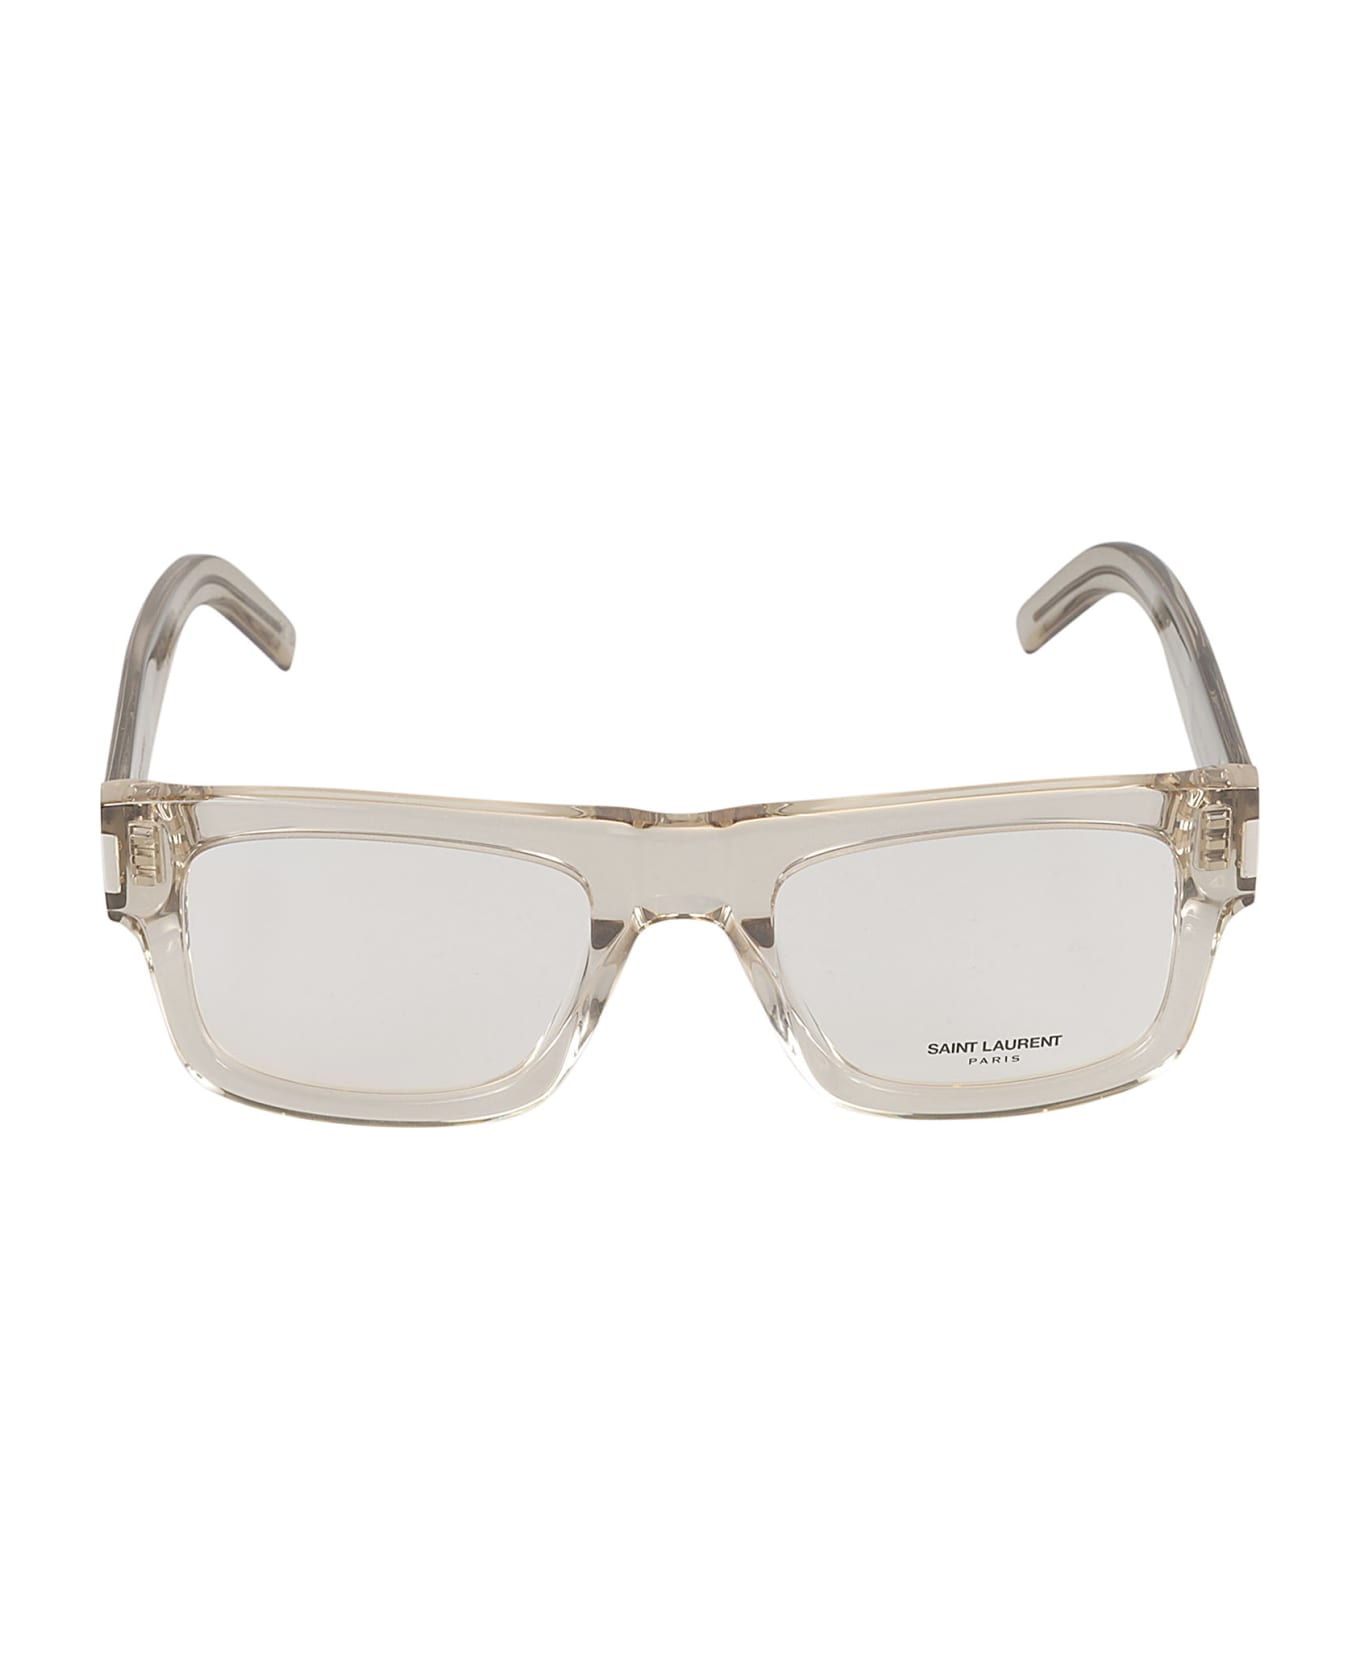 Saint Laurent Eyewear Square Frame Glasses - Beige/Transparent アイウェア